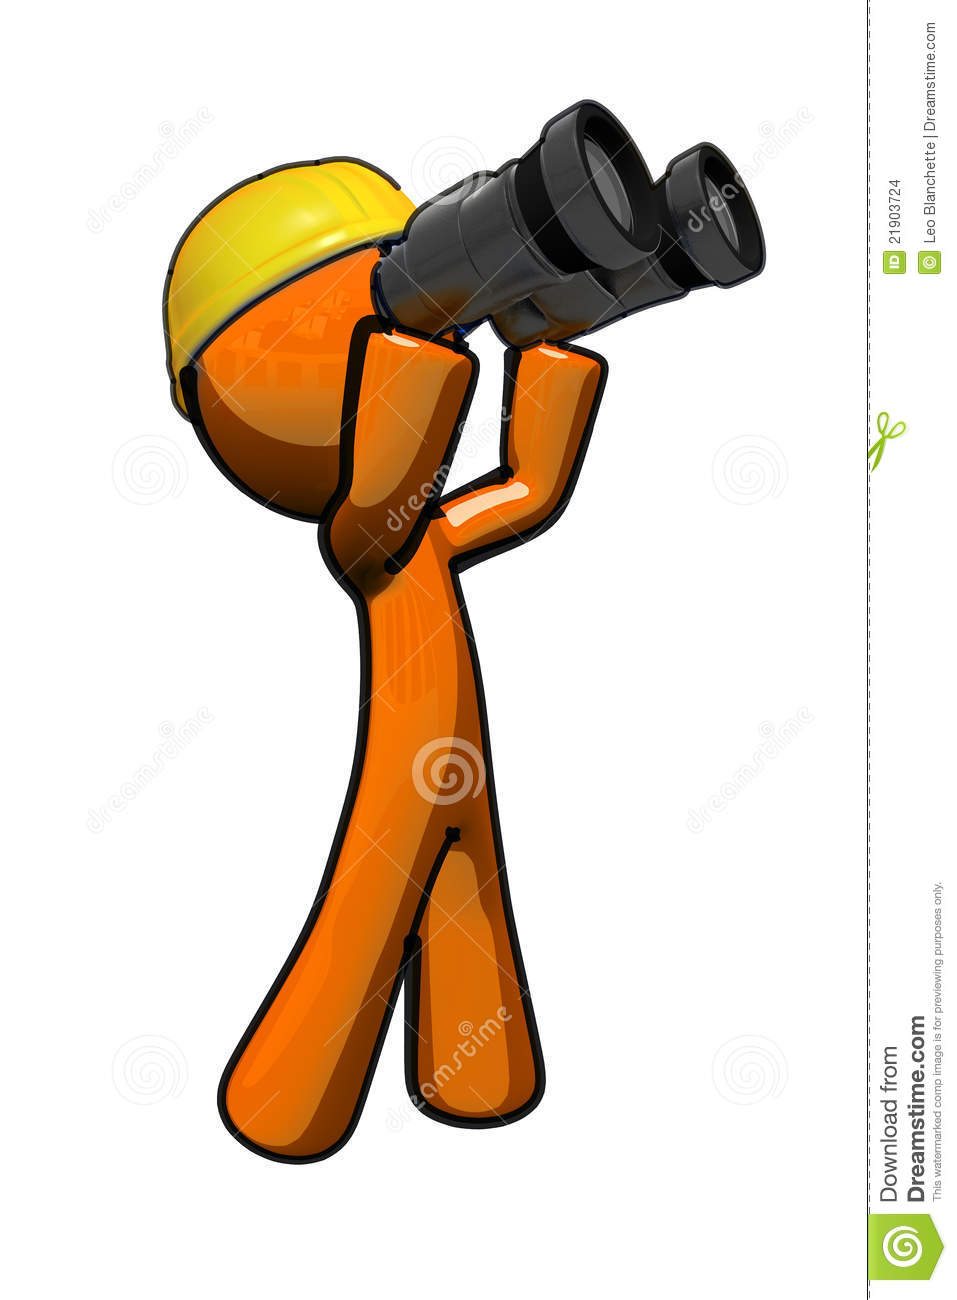 Orange Man With Hard Hat And Binoculars Stock Images   Image  21903724